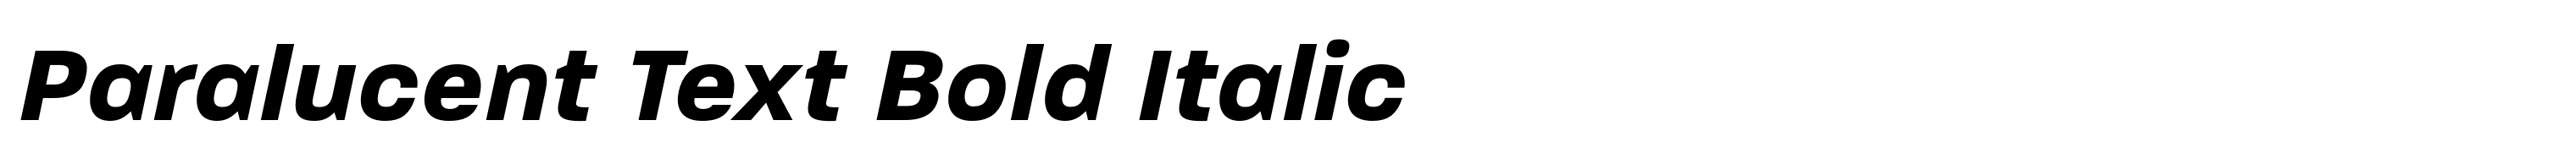 Paralucent Text Bold Italic